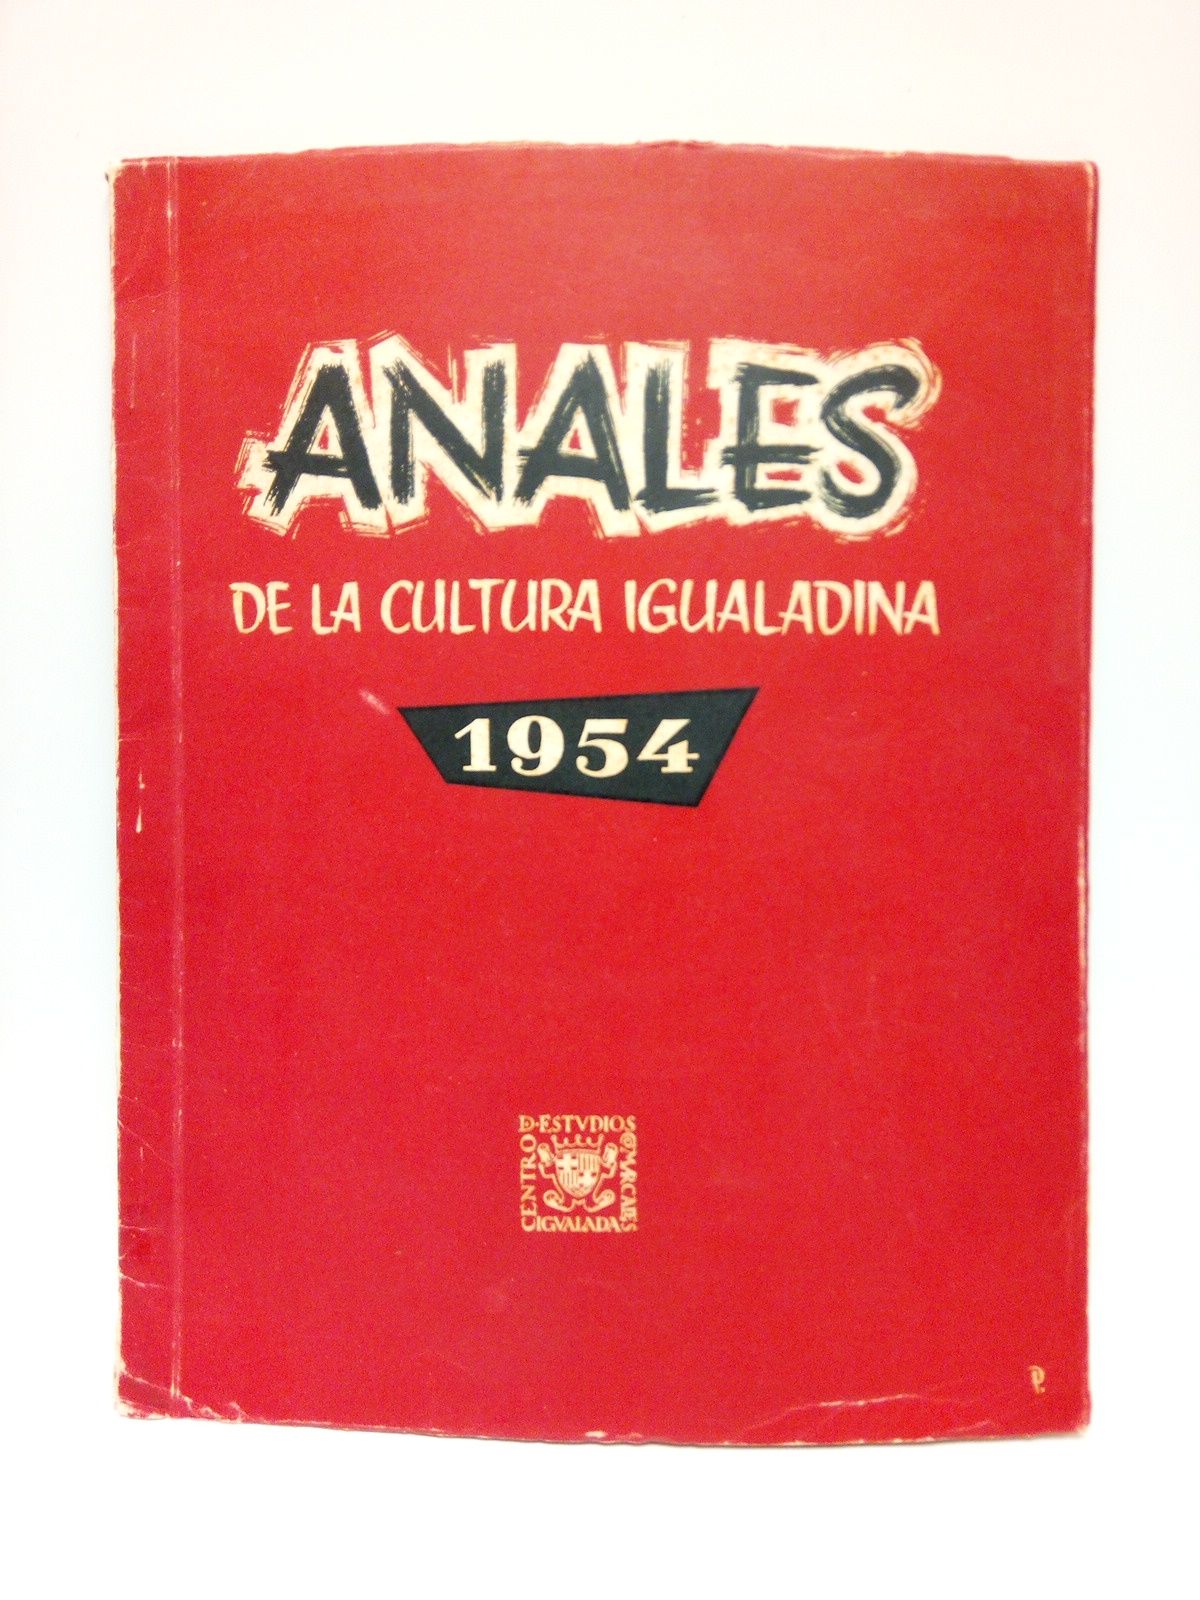 ANALES DE LA CULTURA IGUALADINA - Anales de la Cultura Igualadina. 1954